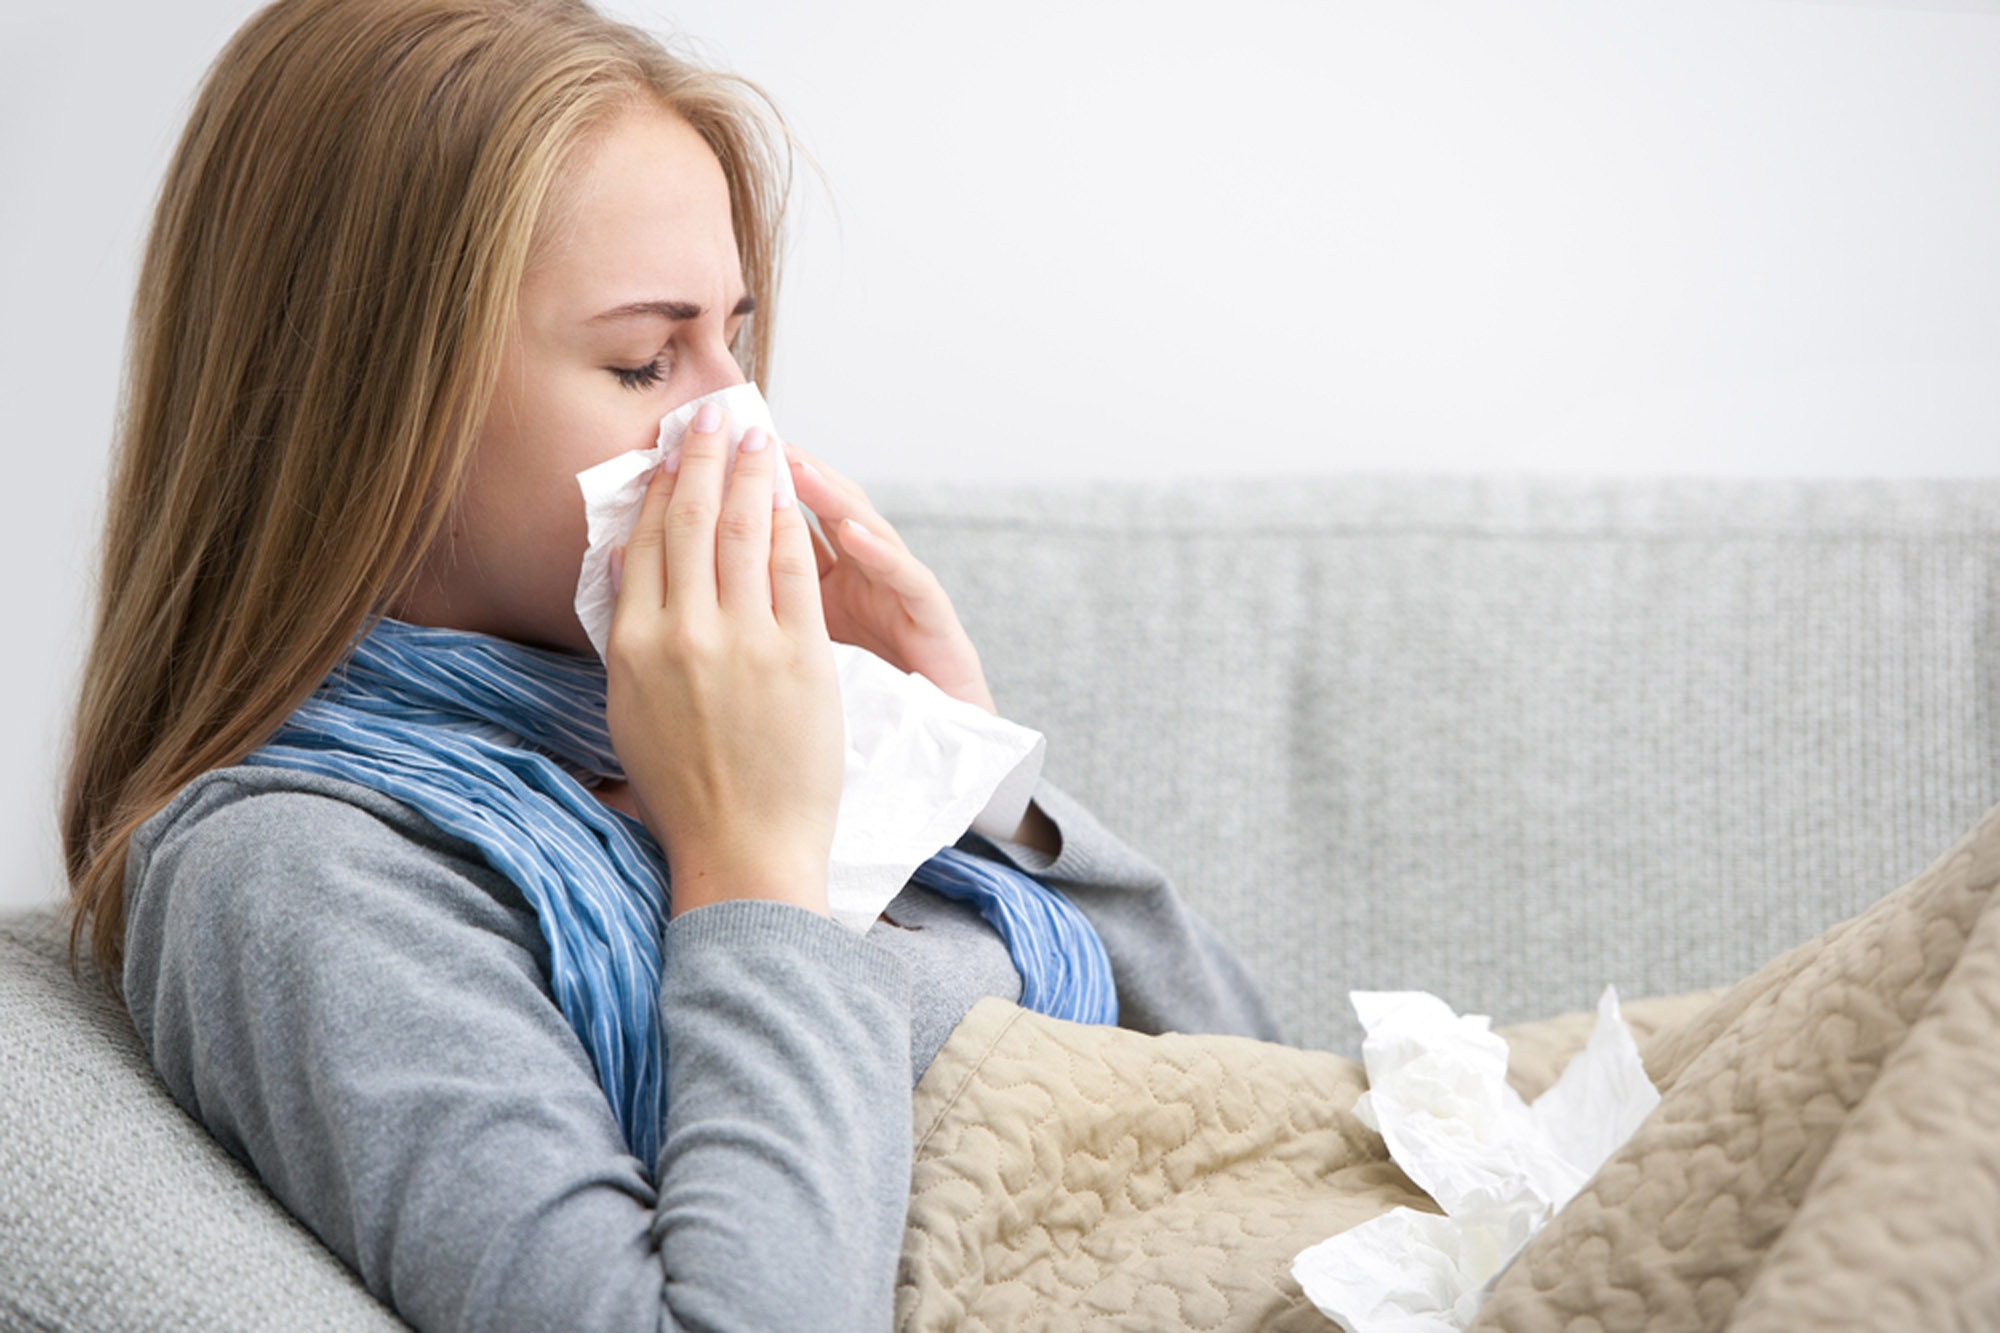 Preventative Measures for Winter Colds